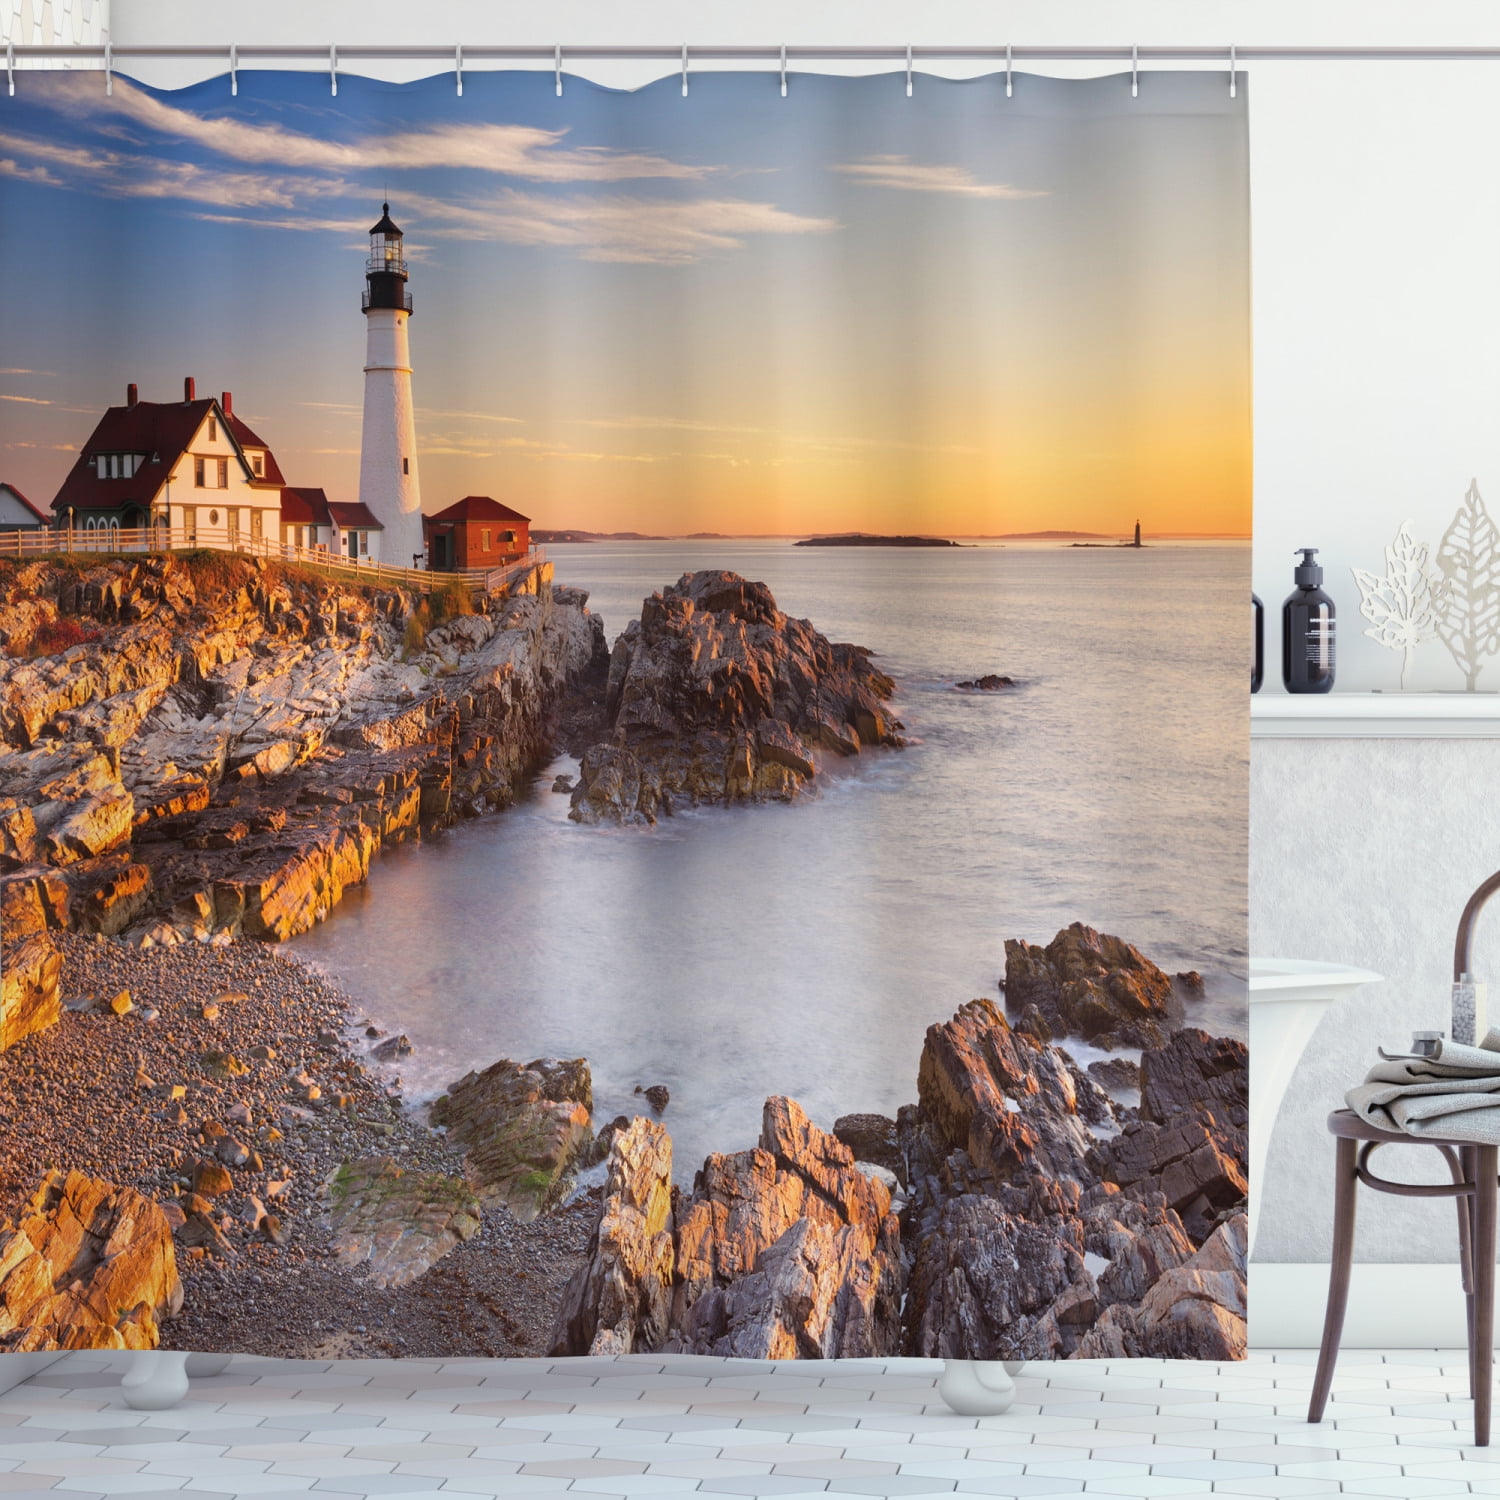 Seaside Lighthouse Waterproof Fabric Shower Curtain Set Bathroom Decor w/ Hooks 